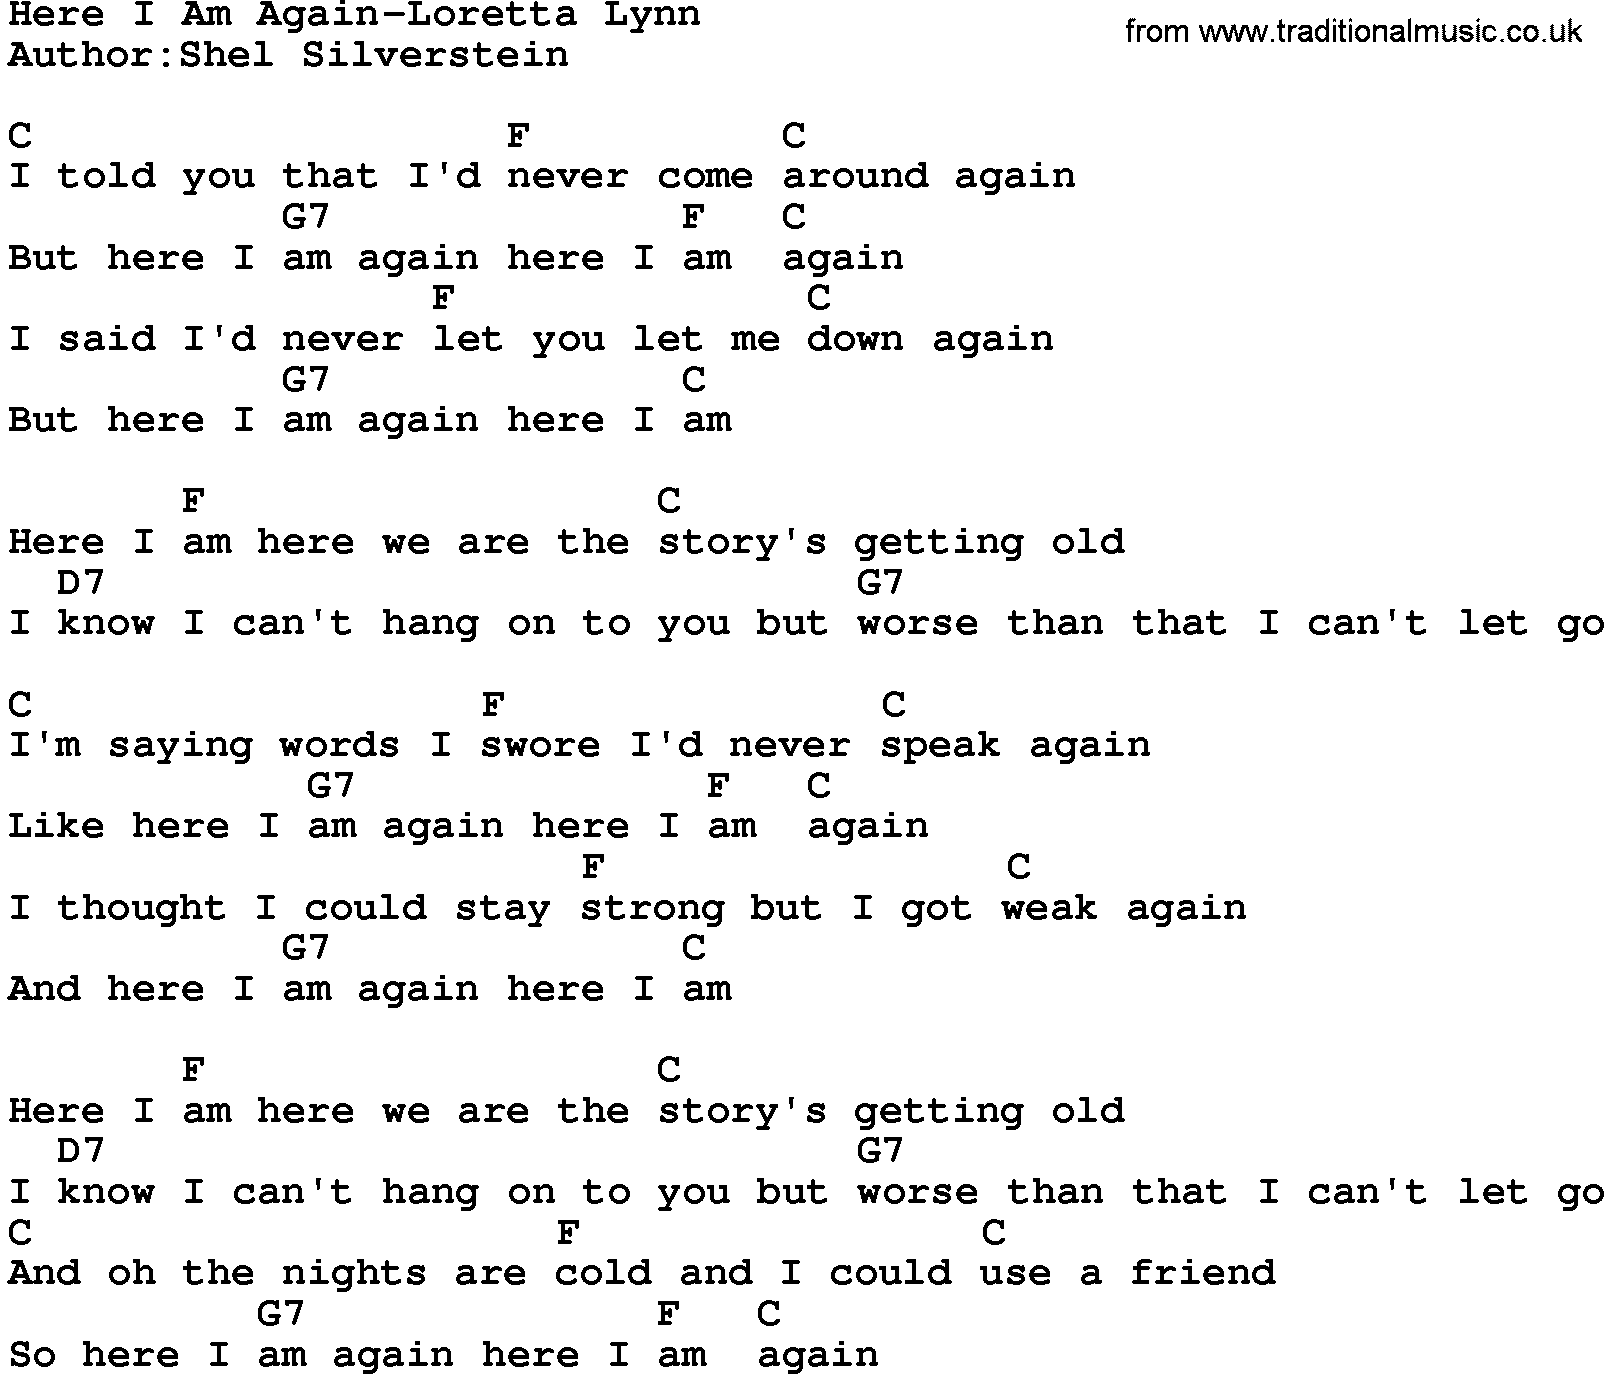 Country music song: Here I Am Again-Loretta Lynn lyrics and chords